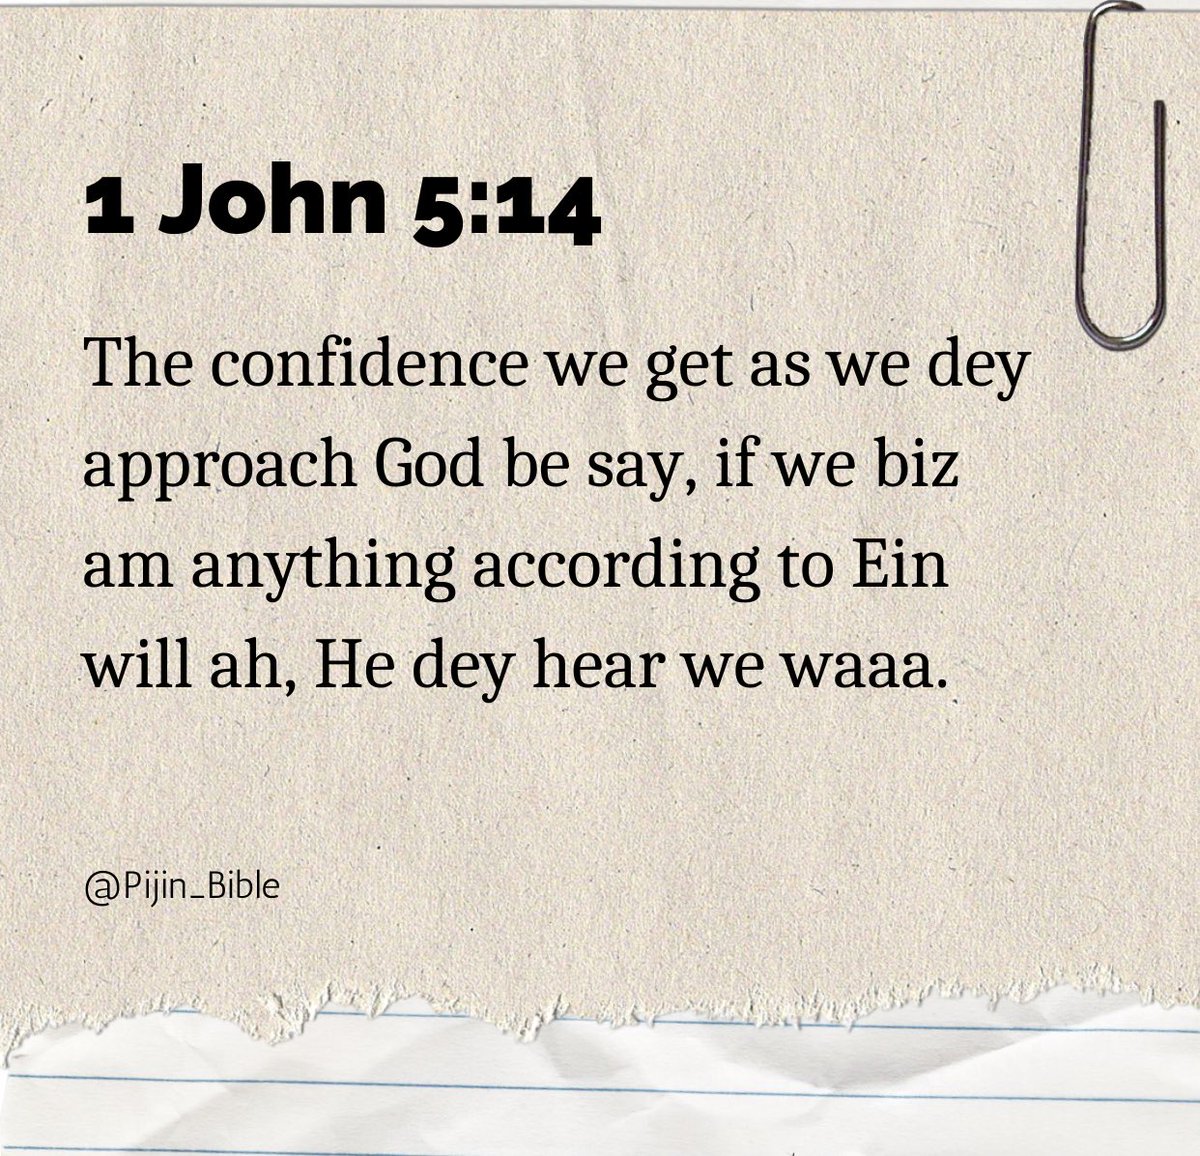 1 John 5:14
#PijinBible